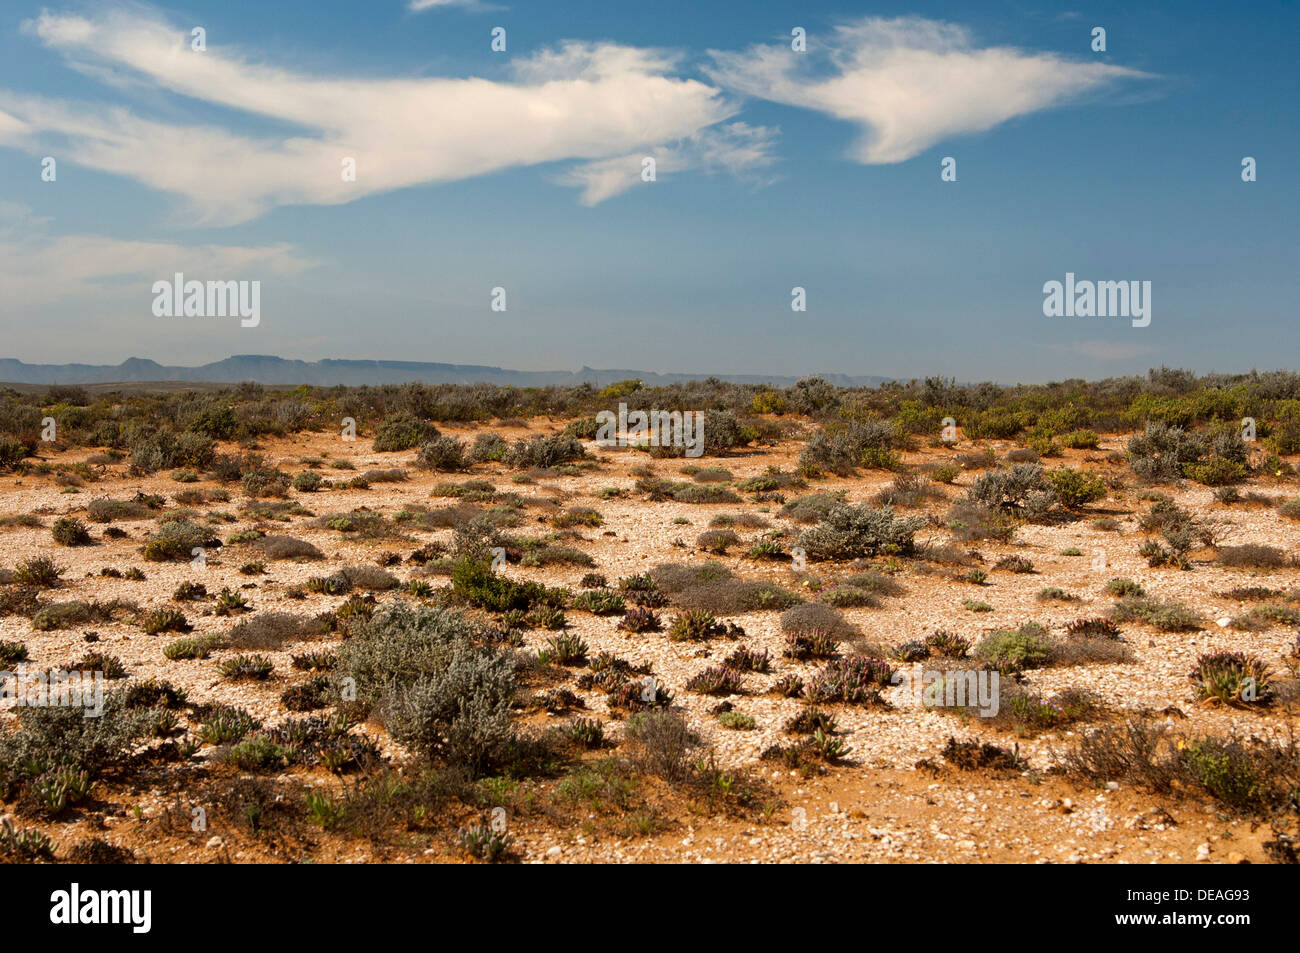 Karoo vegetation on the quartz fields of the Knersvlakte plateau near Vanrhynsdorp, Western Cape Province, South Africa, Africa Stock Photo